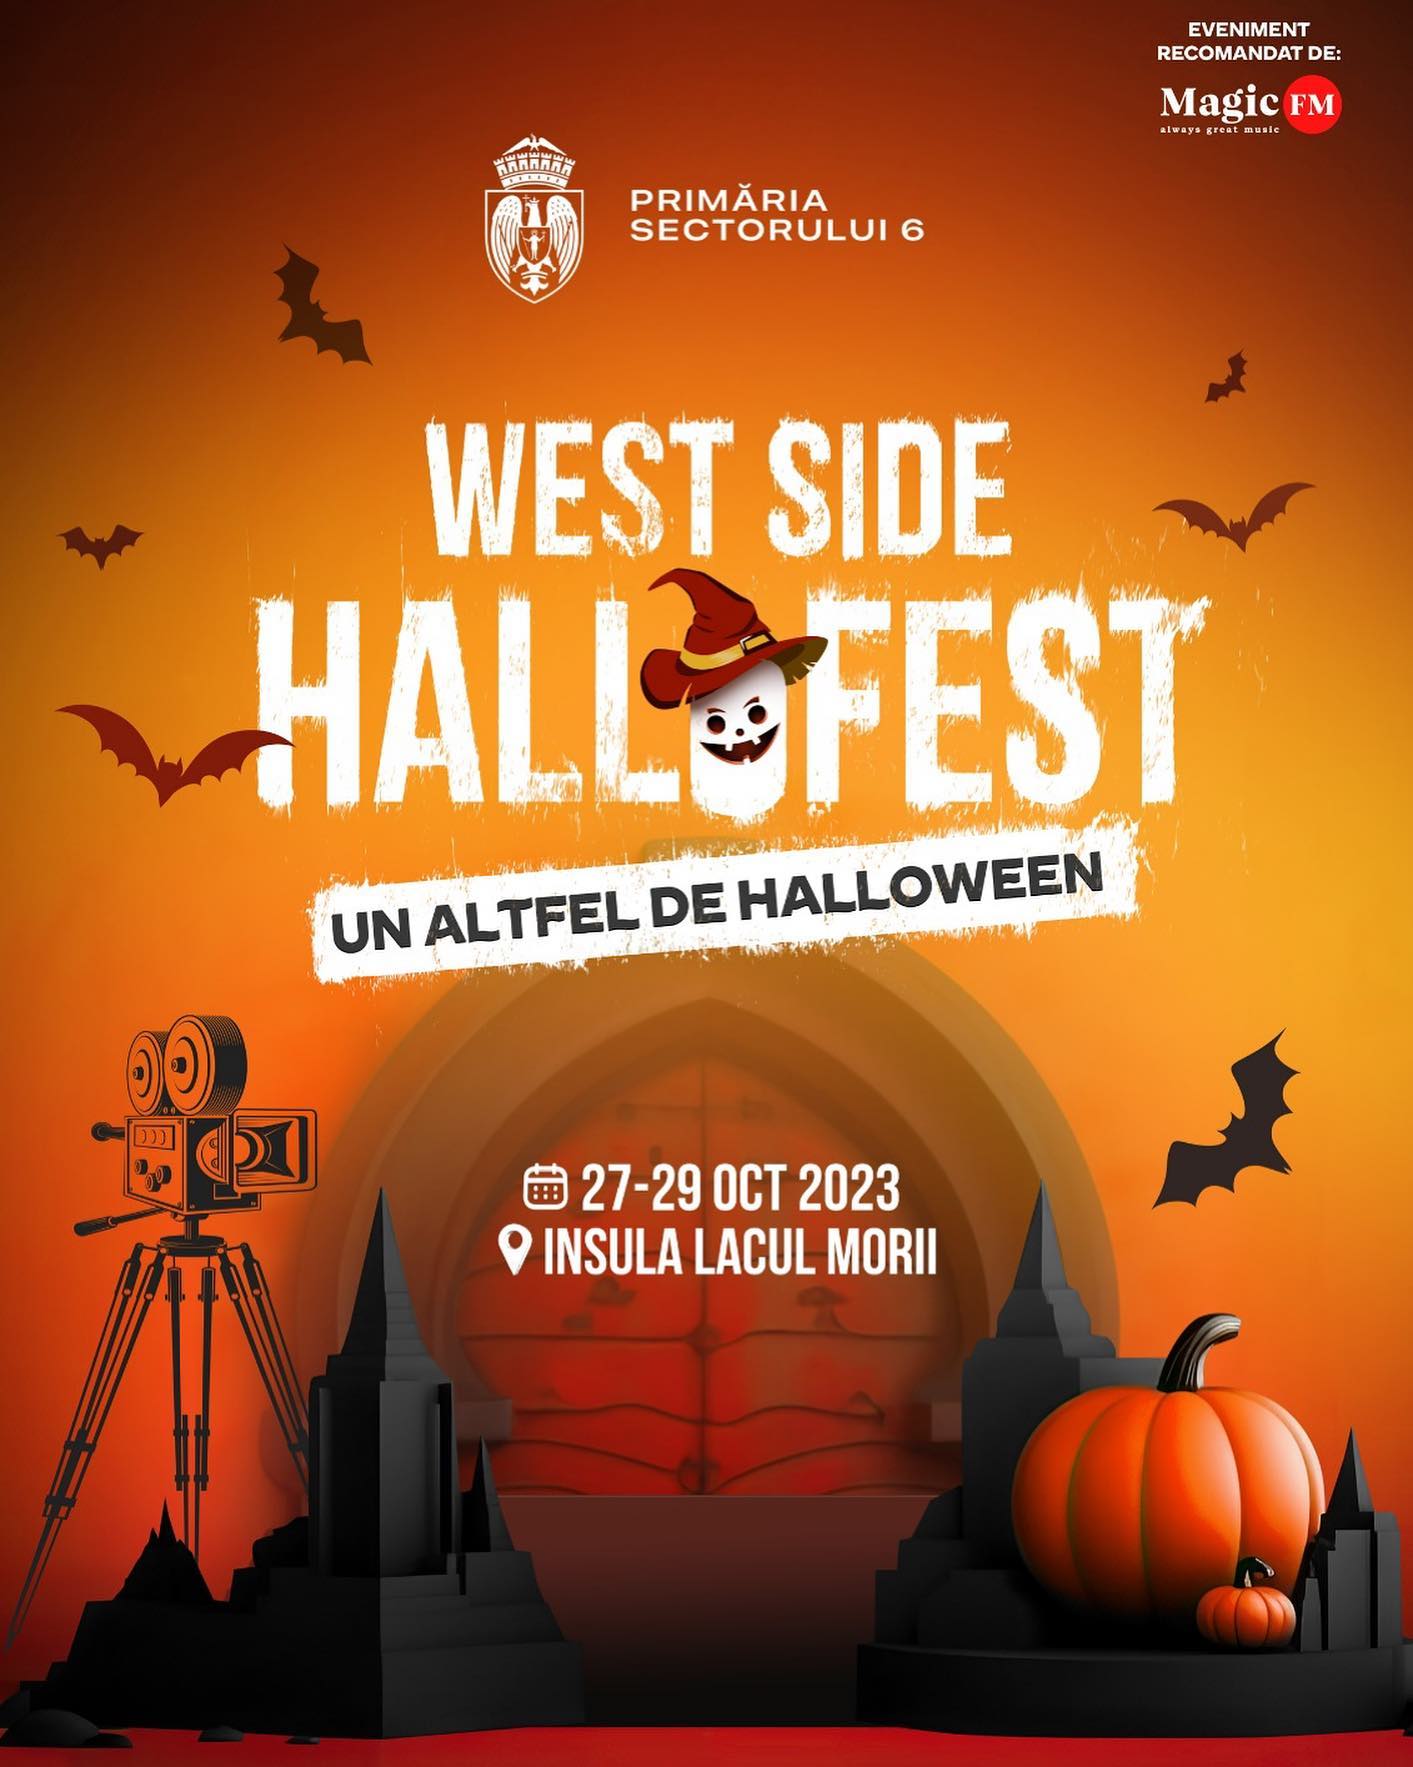 West Side Halloween Fest bucharest